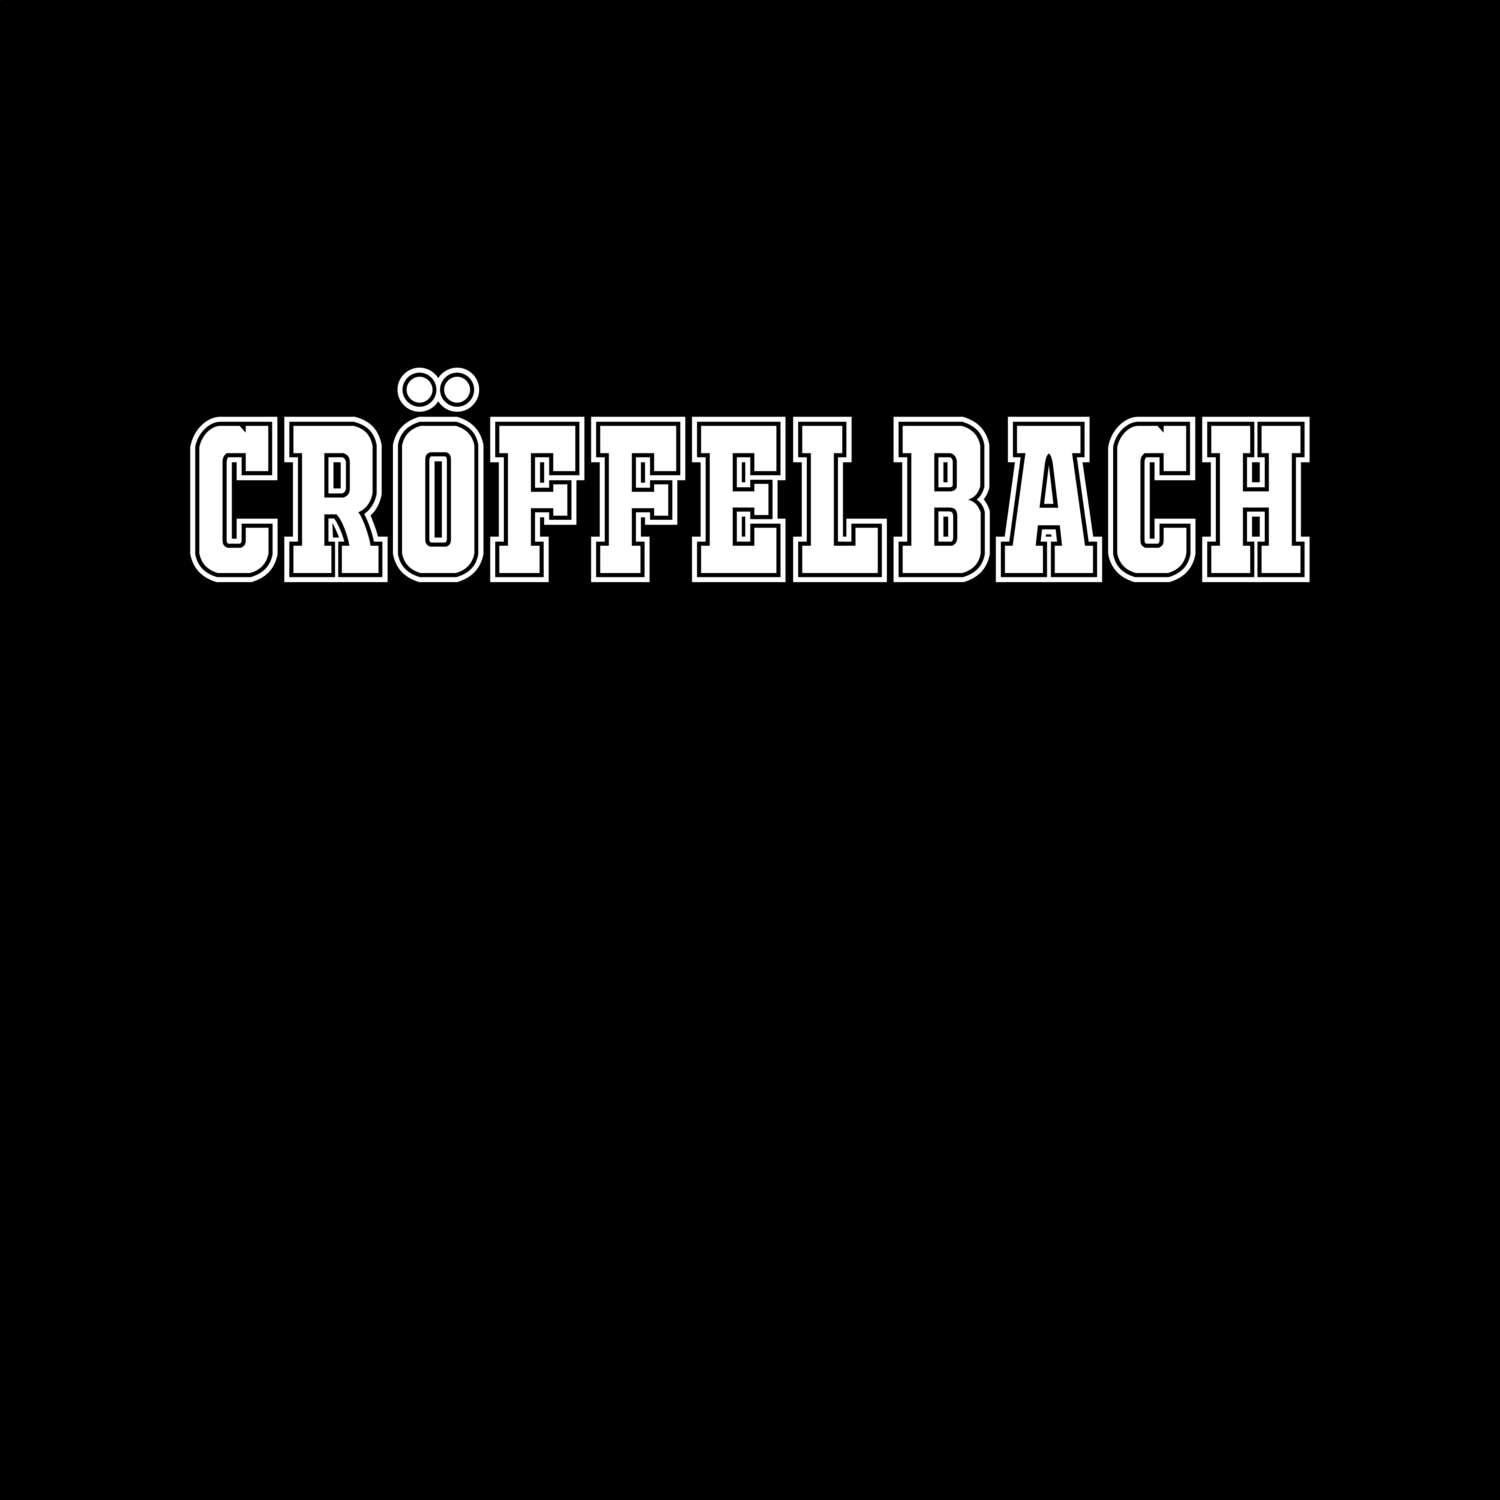 Cröffelbach T-Shirt »Classic«